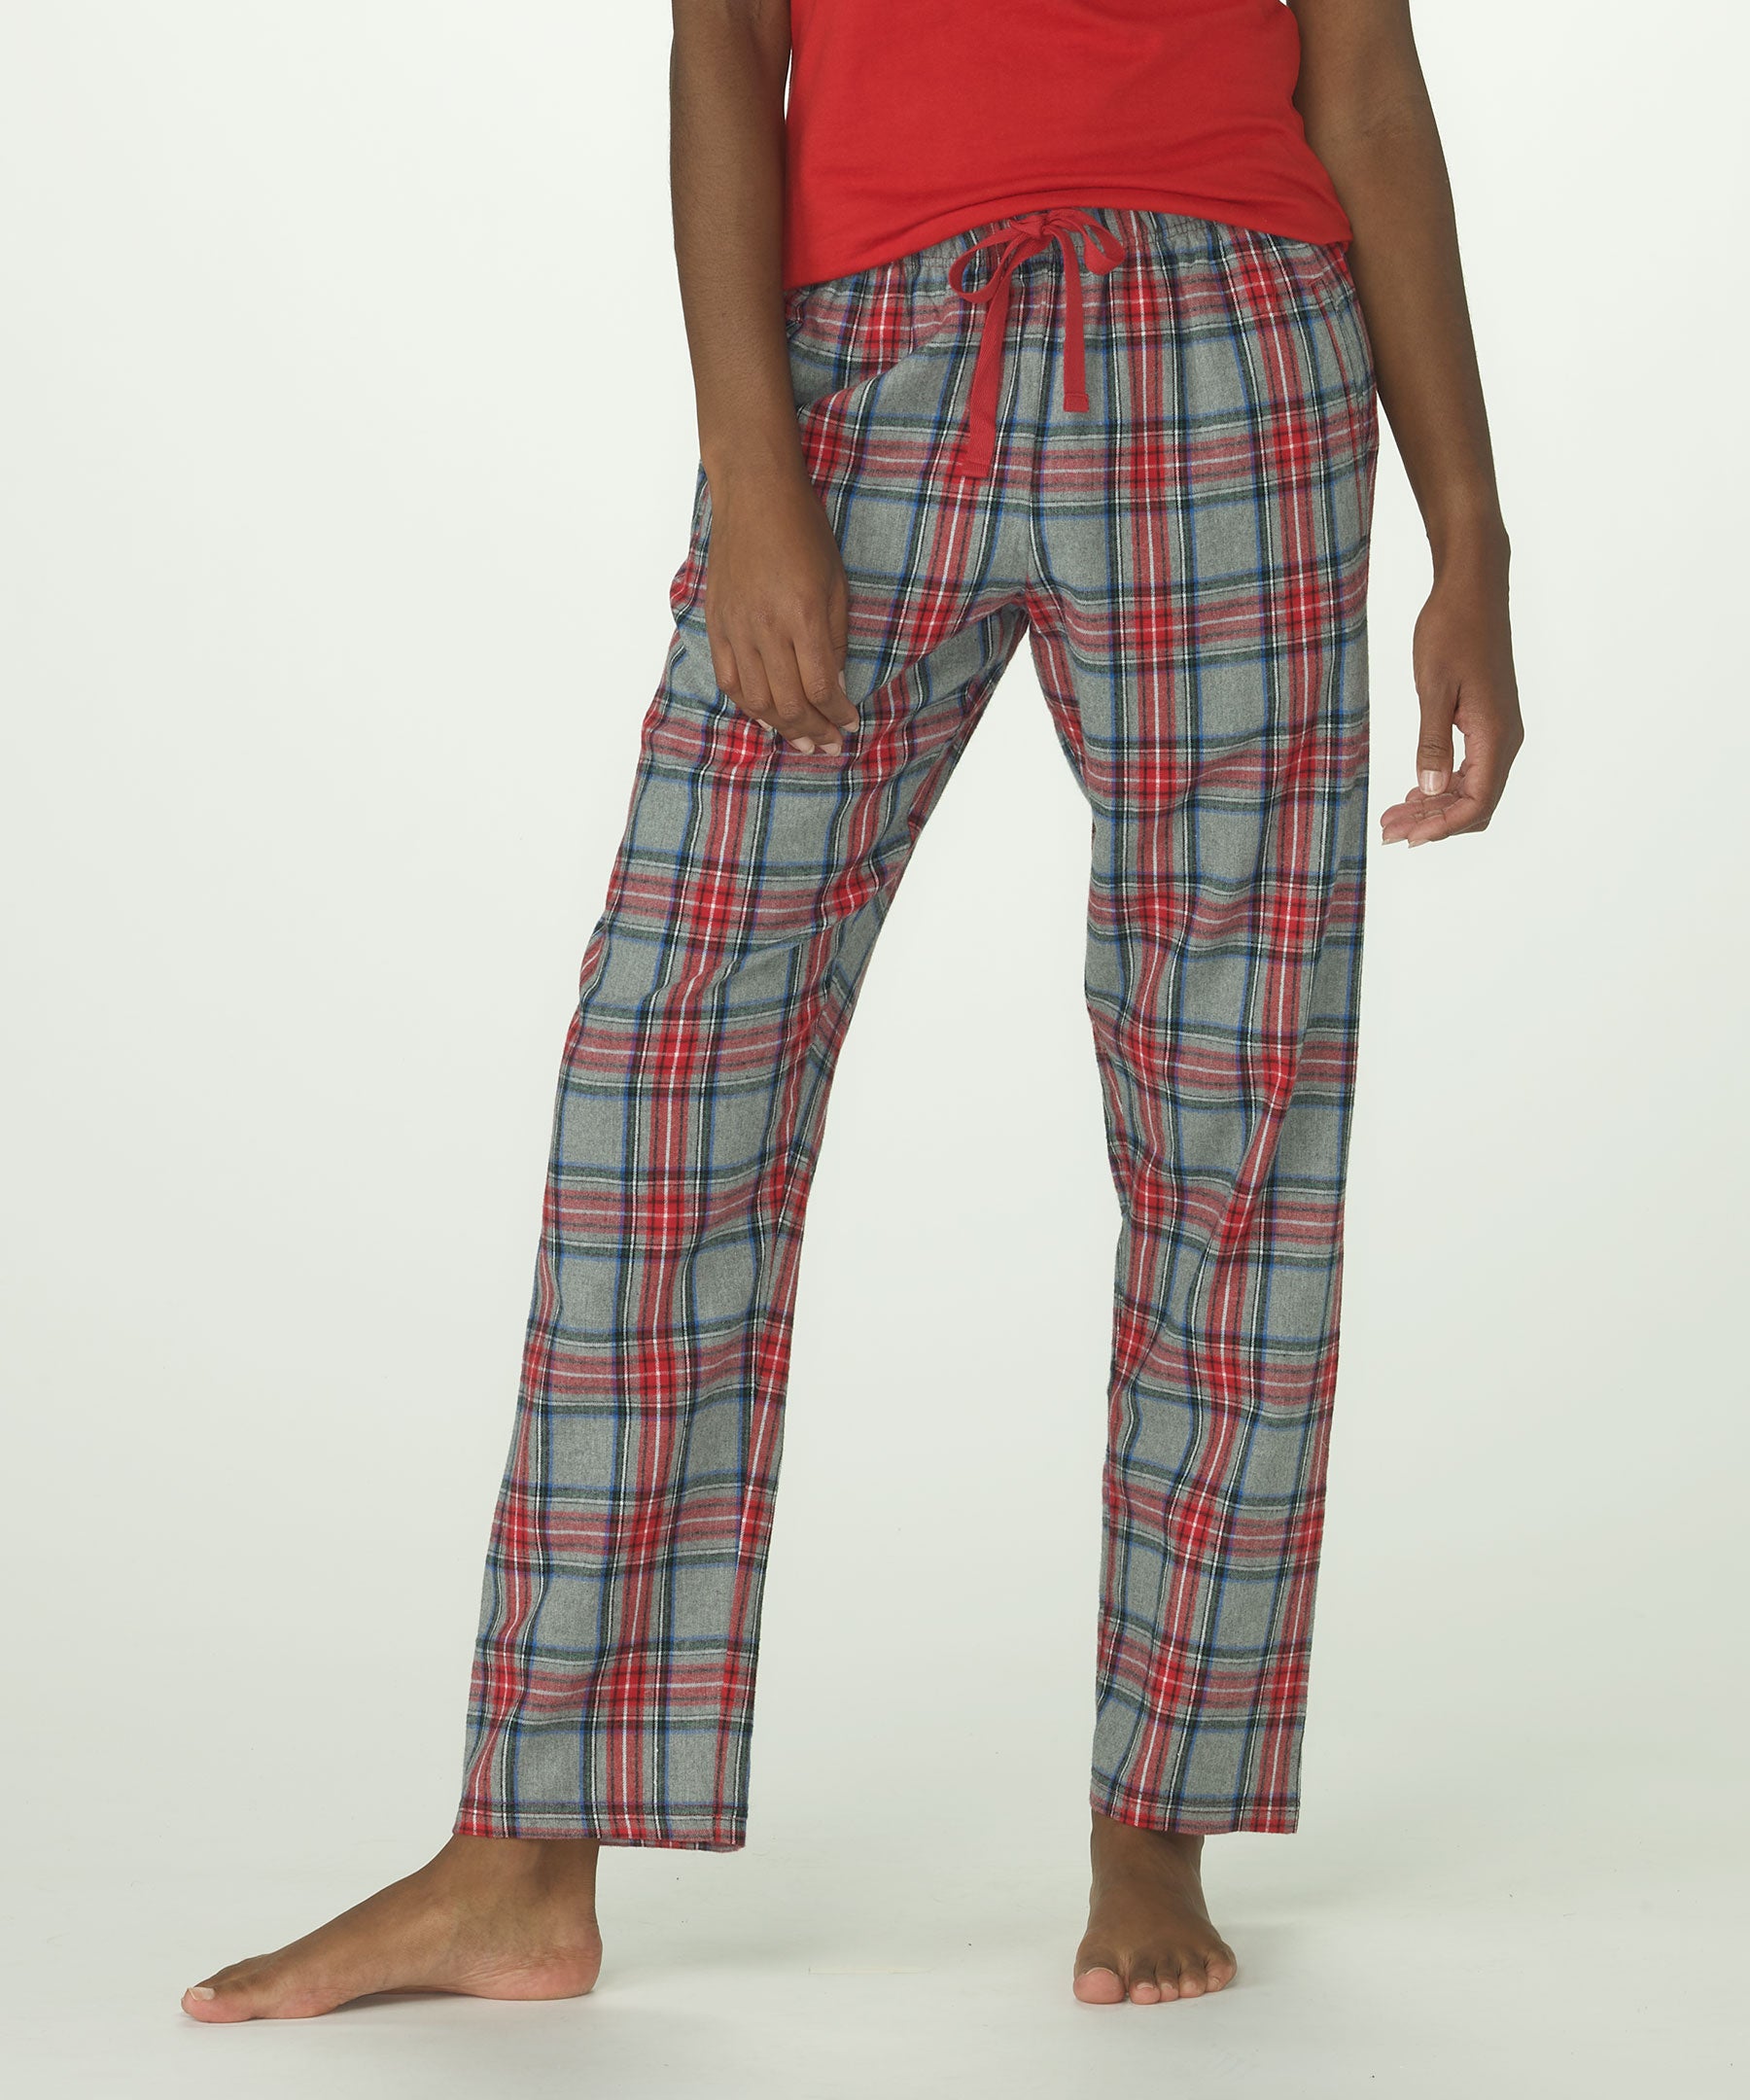 Boxercraft Women's Haley Navy/Gold Plaid Flannel Pajama Pant